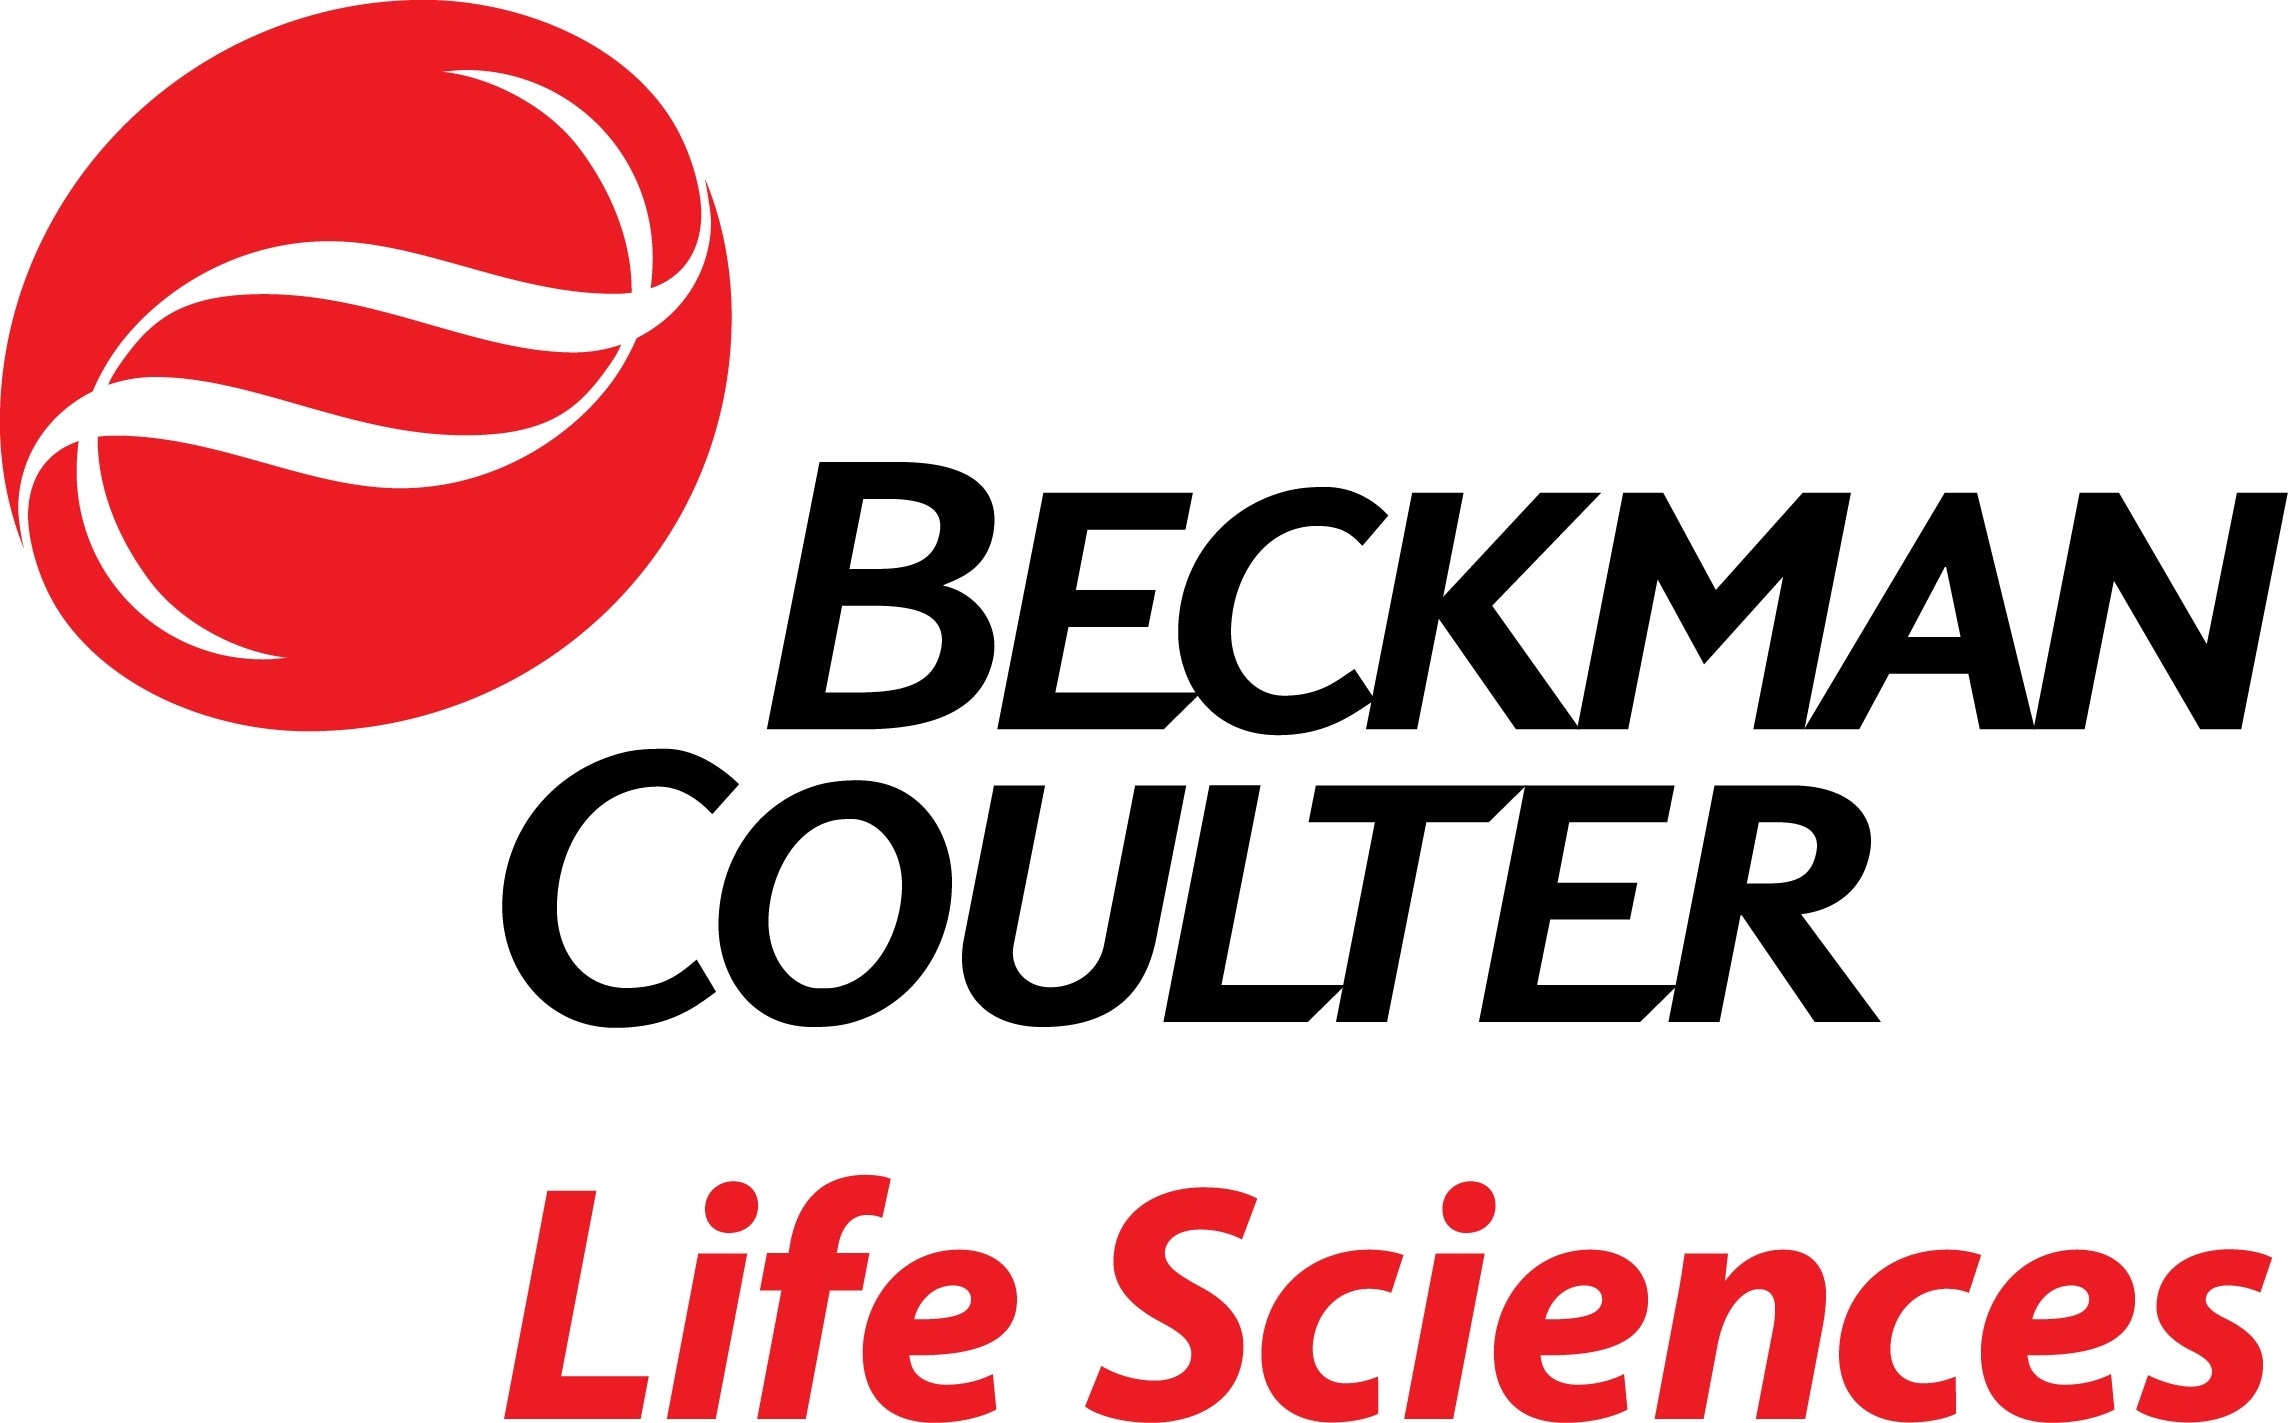 Beckman Coulter Life Sciences - Centrifugation logo.